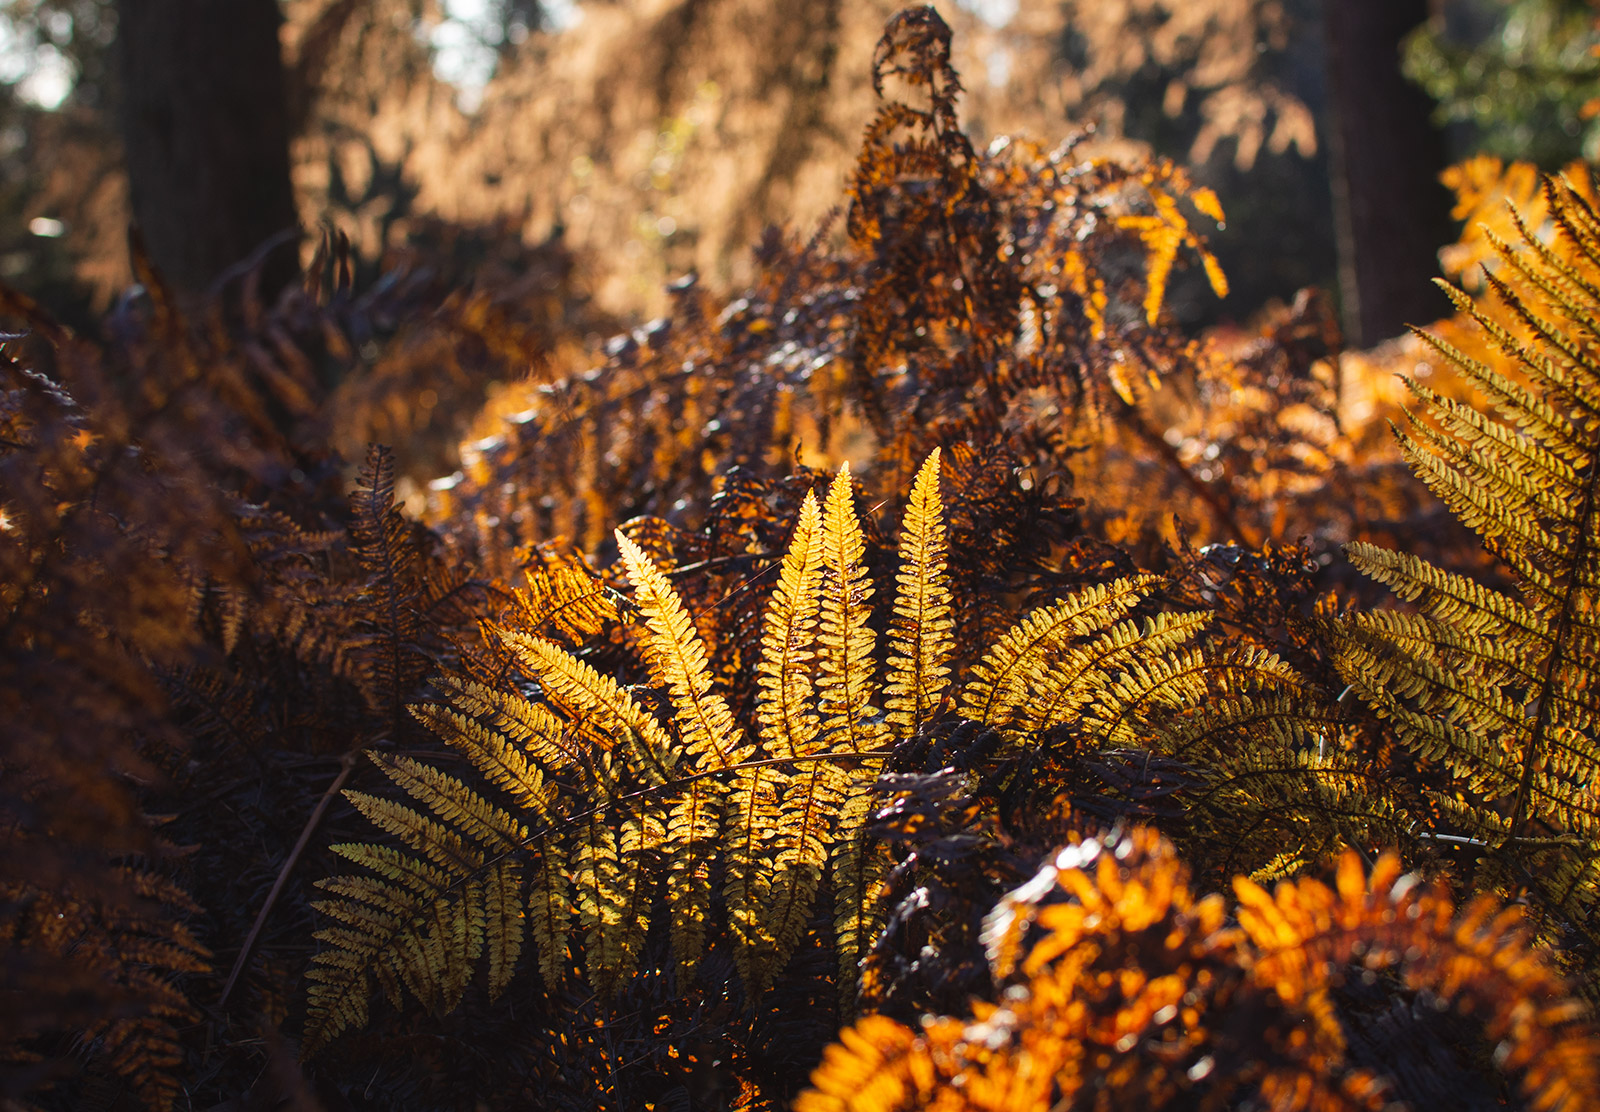 Orange and yellow ferns